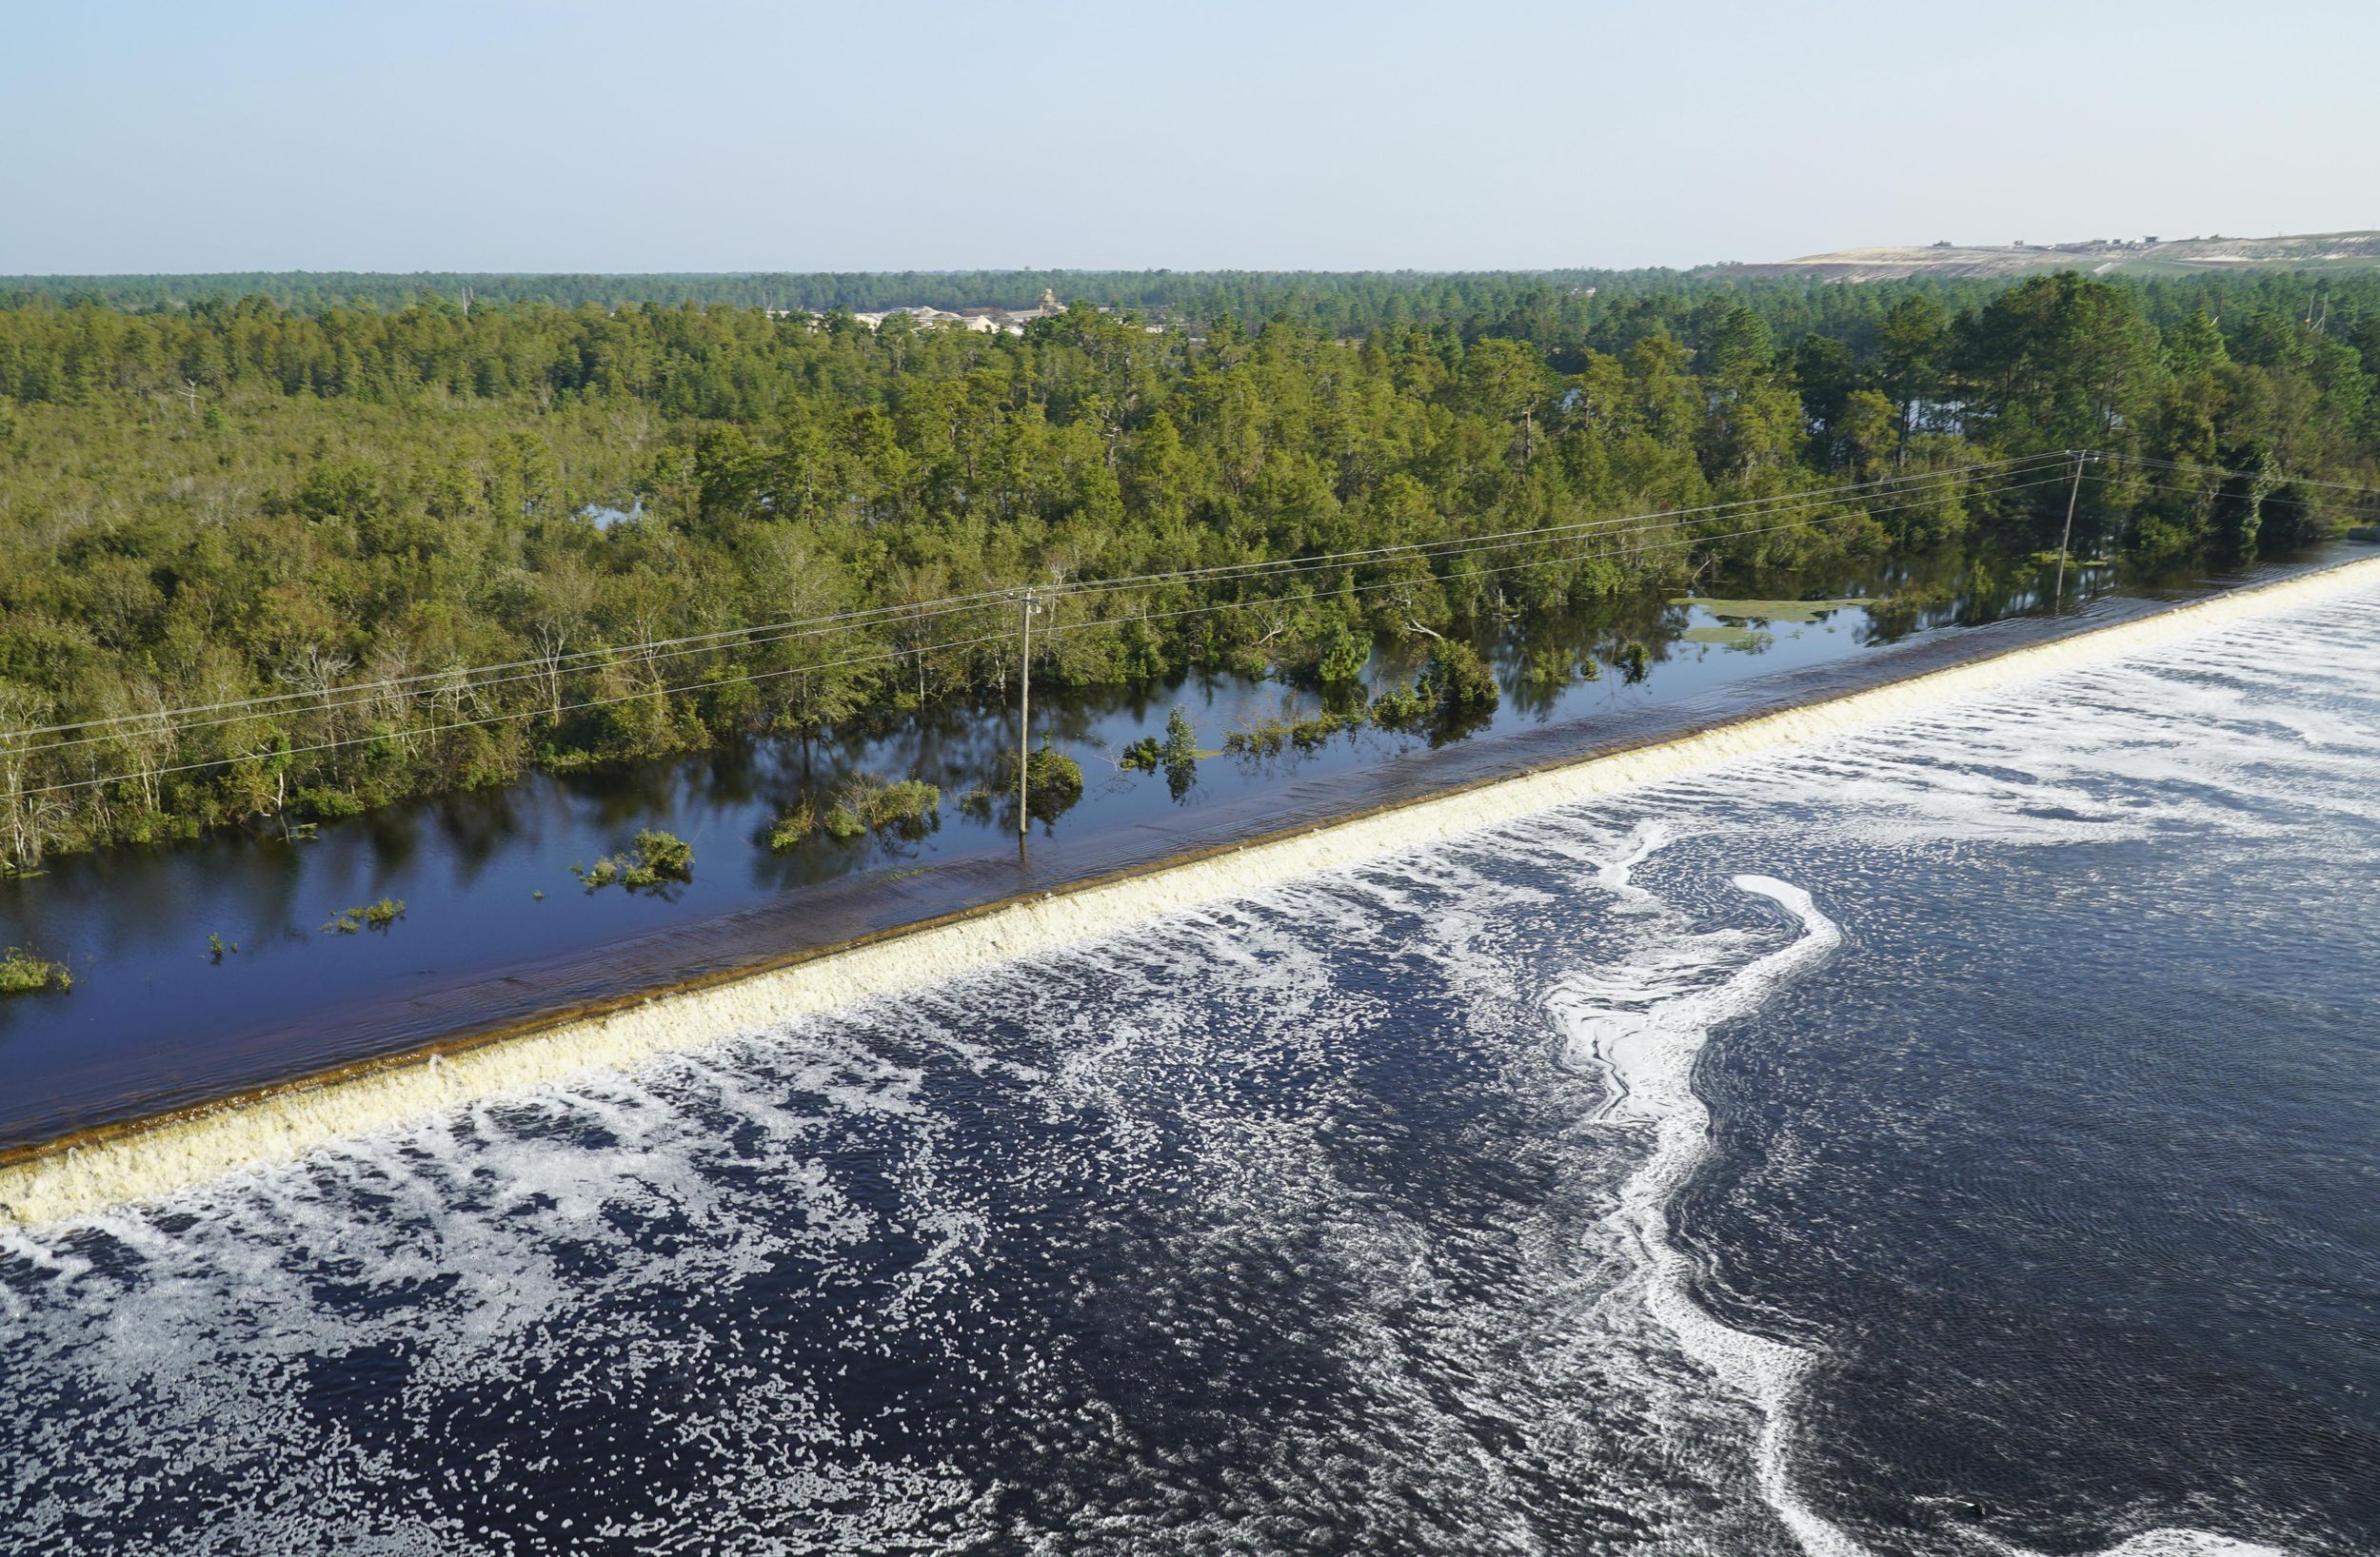 dam-breach-at-duke-energy-plant-in-north-carolina-coal-ash-could-spill